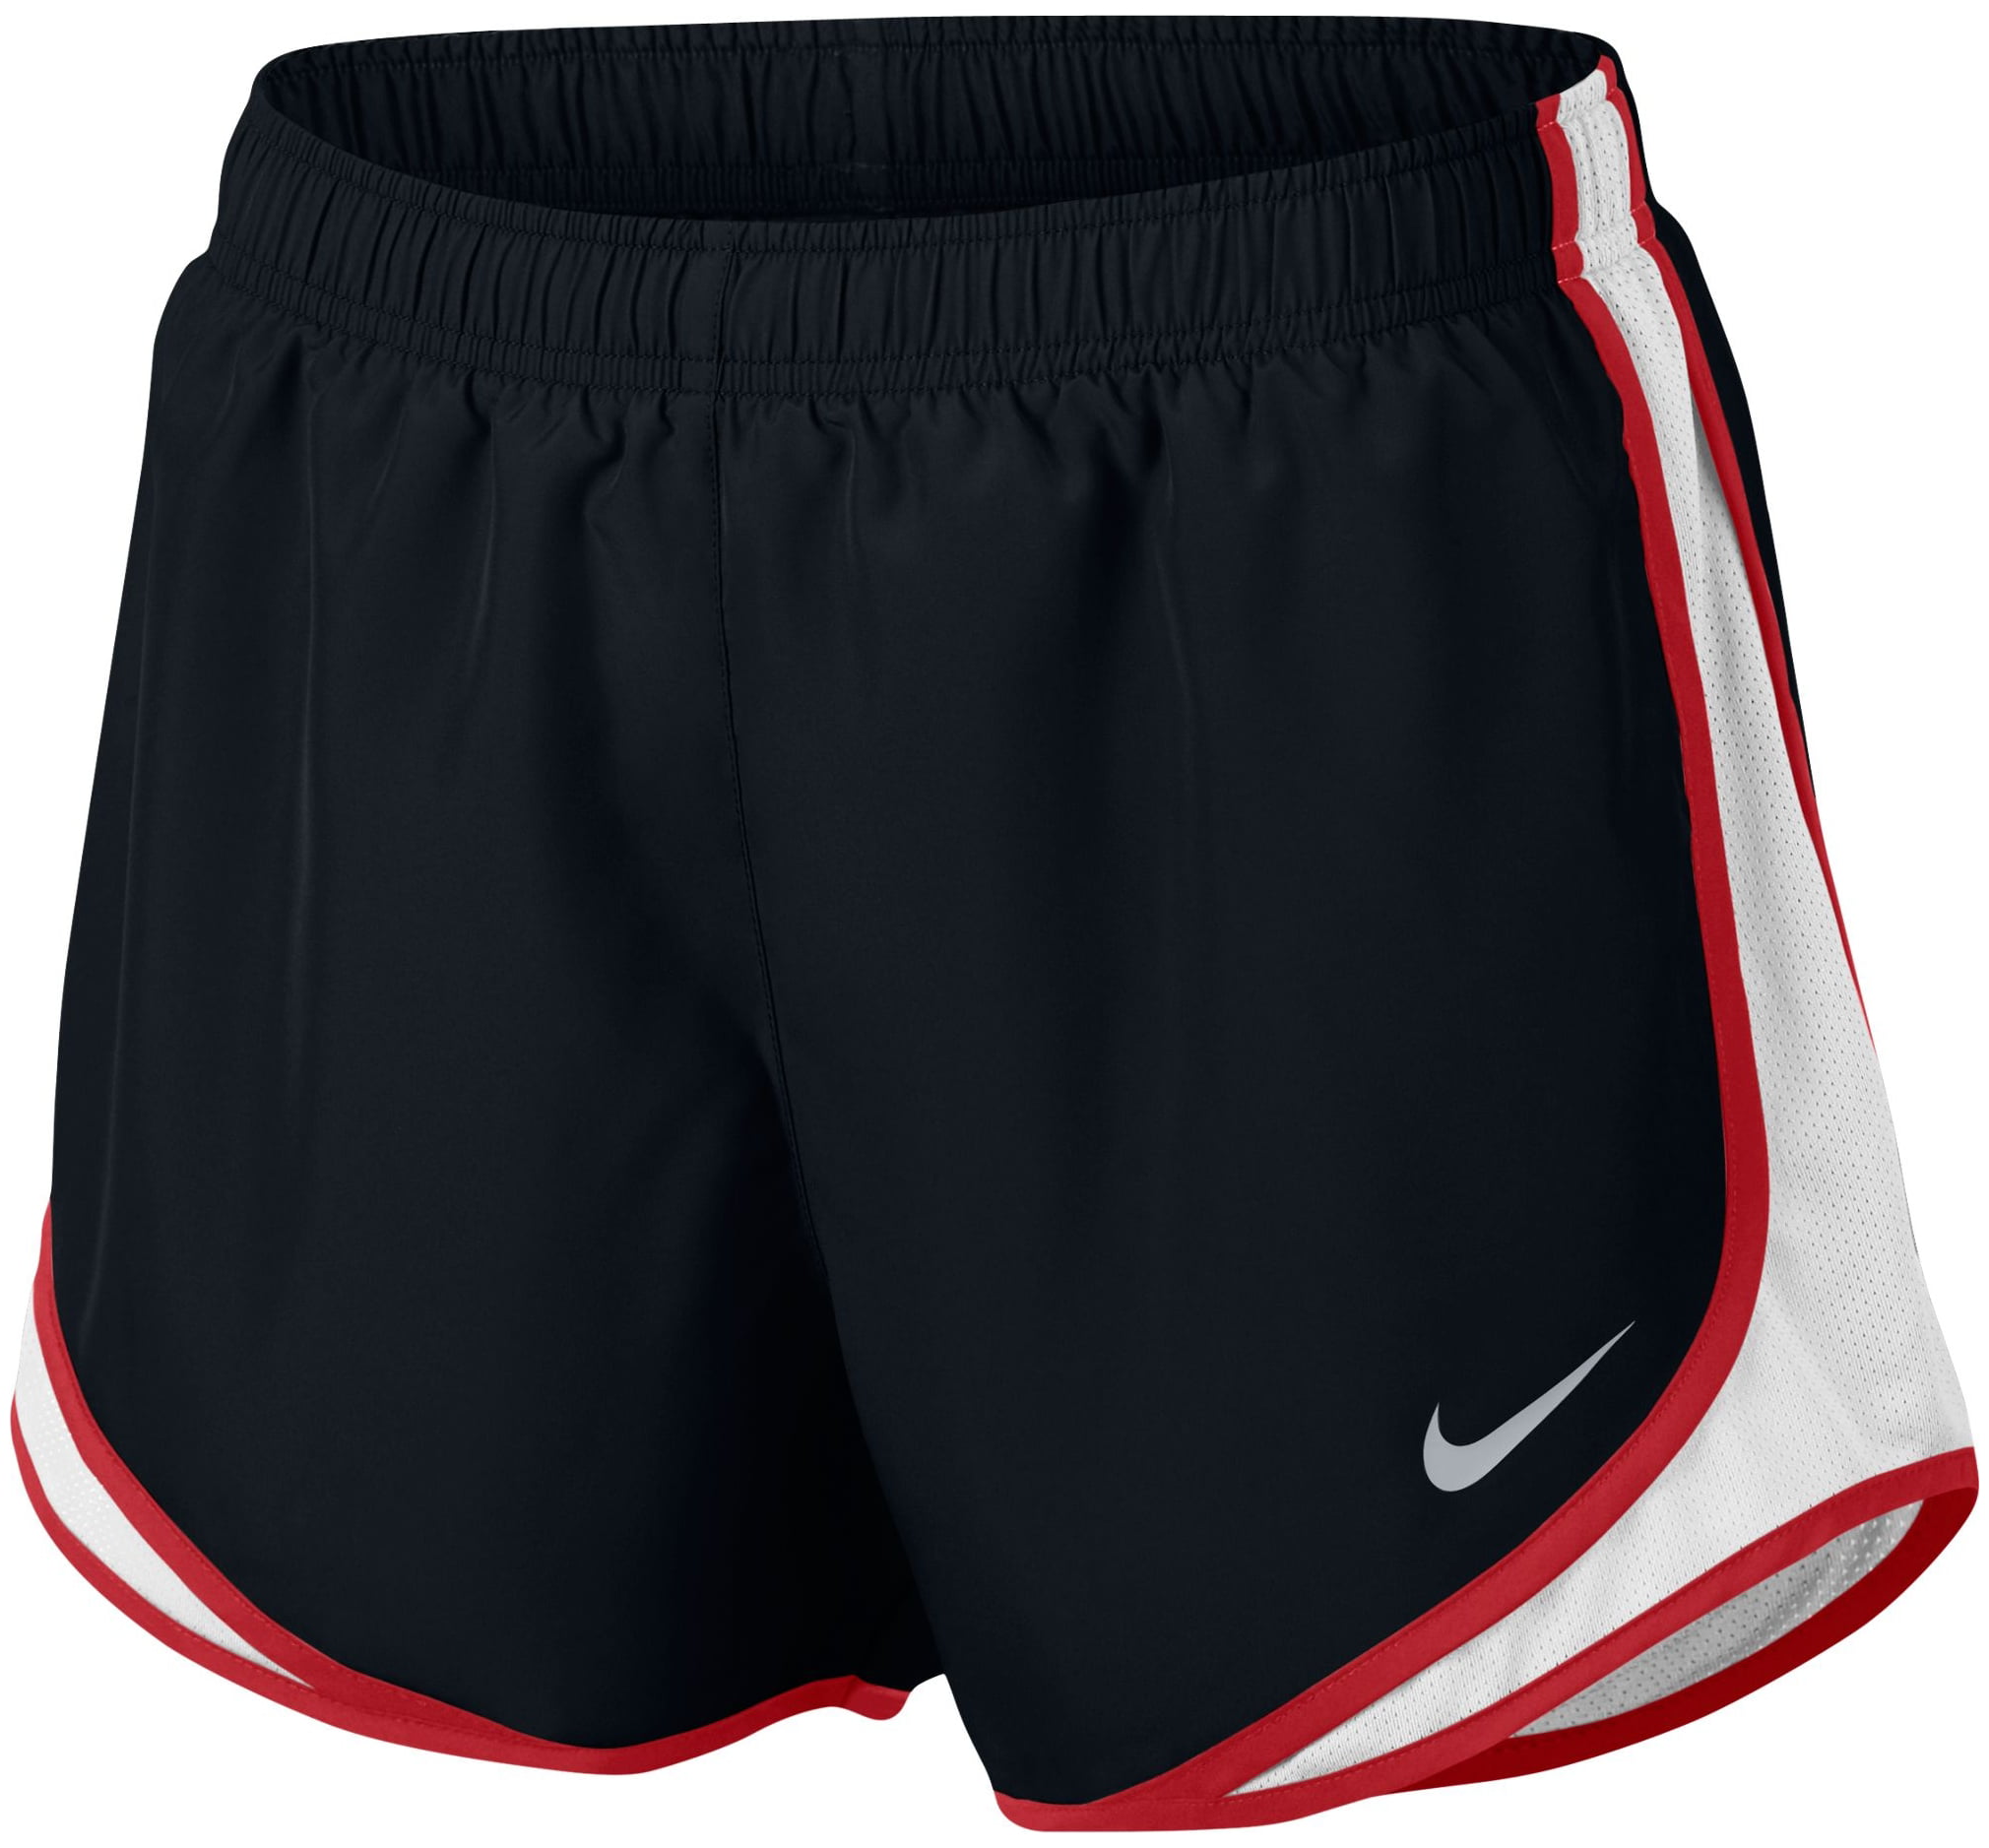 Nike Dry Tempo Short Black/White/Sport Red/Wolf Grey - Walmart.com